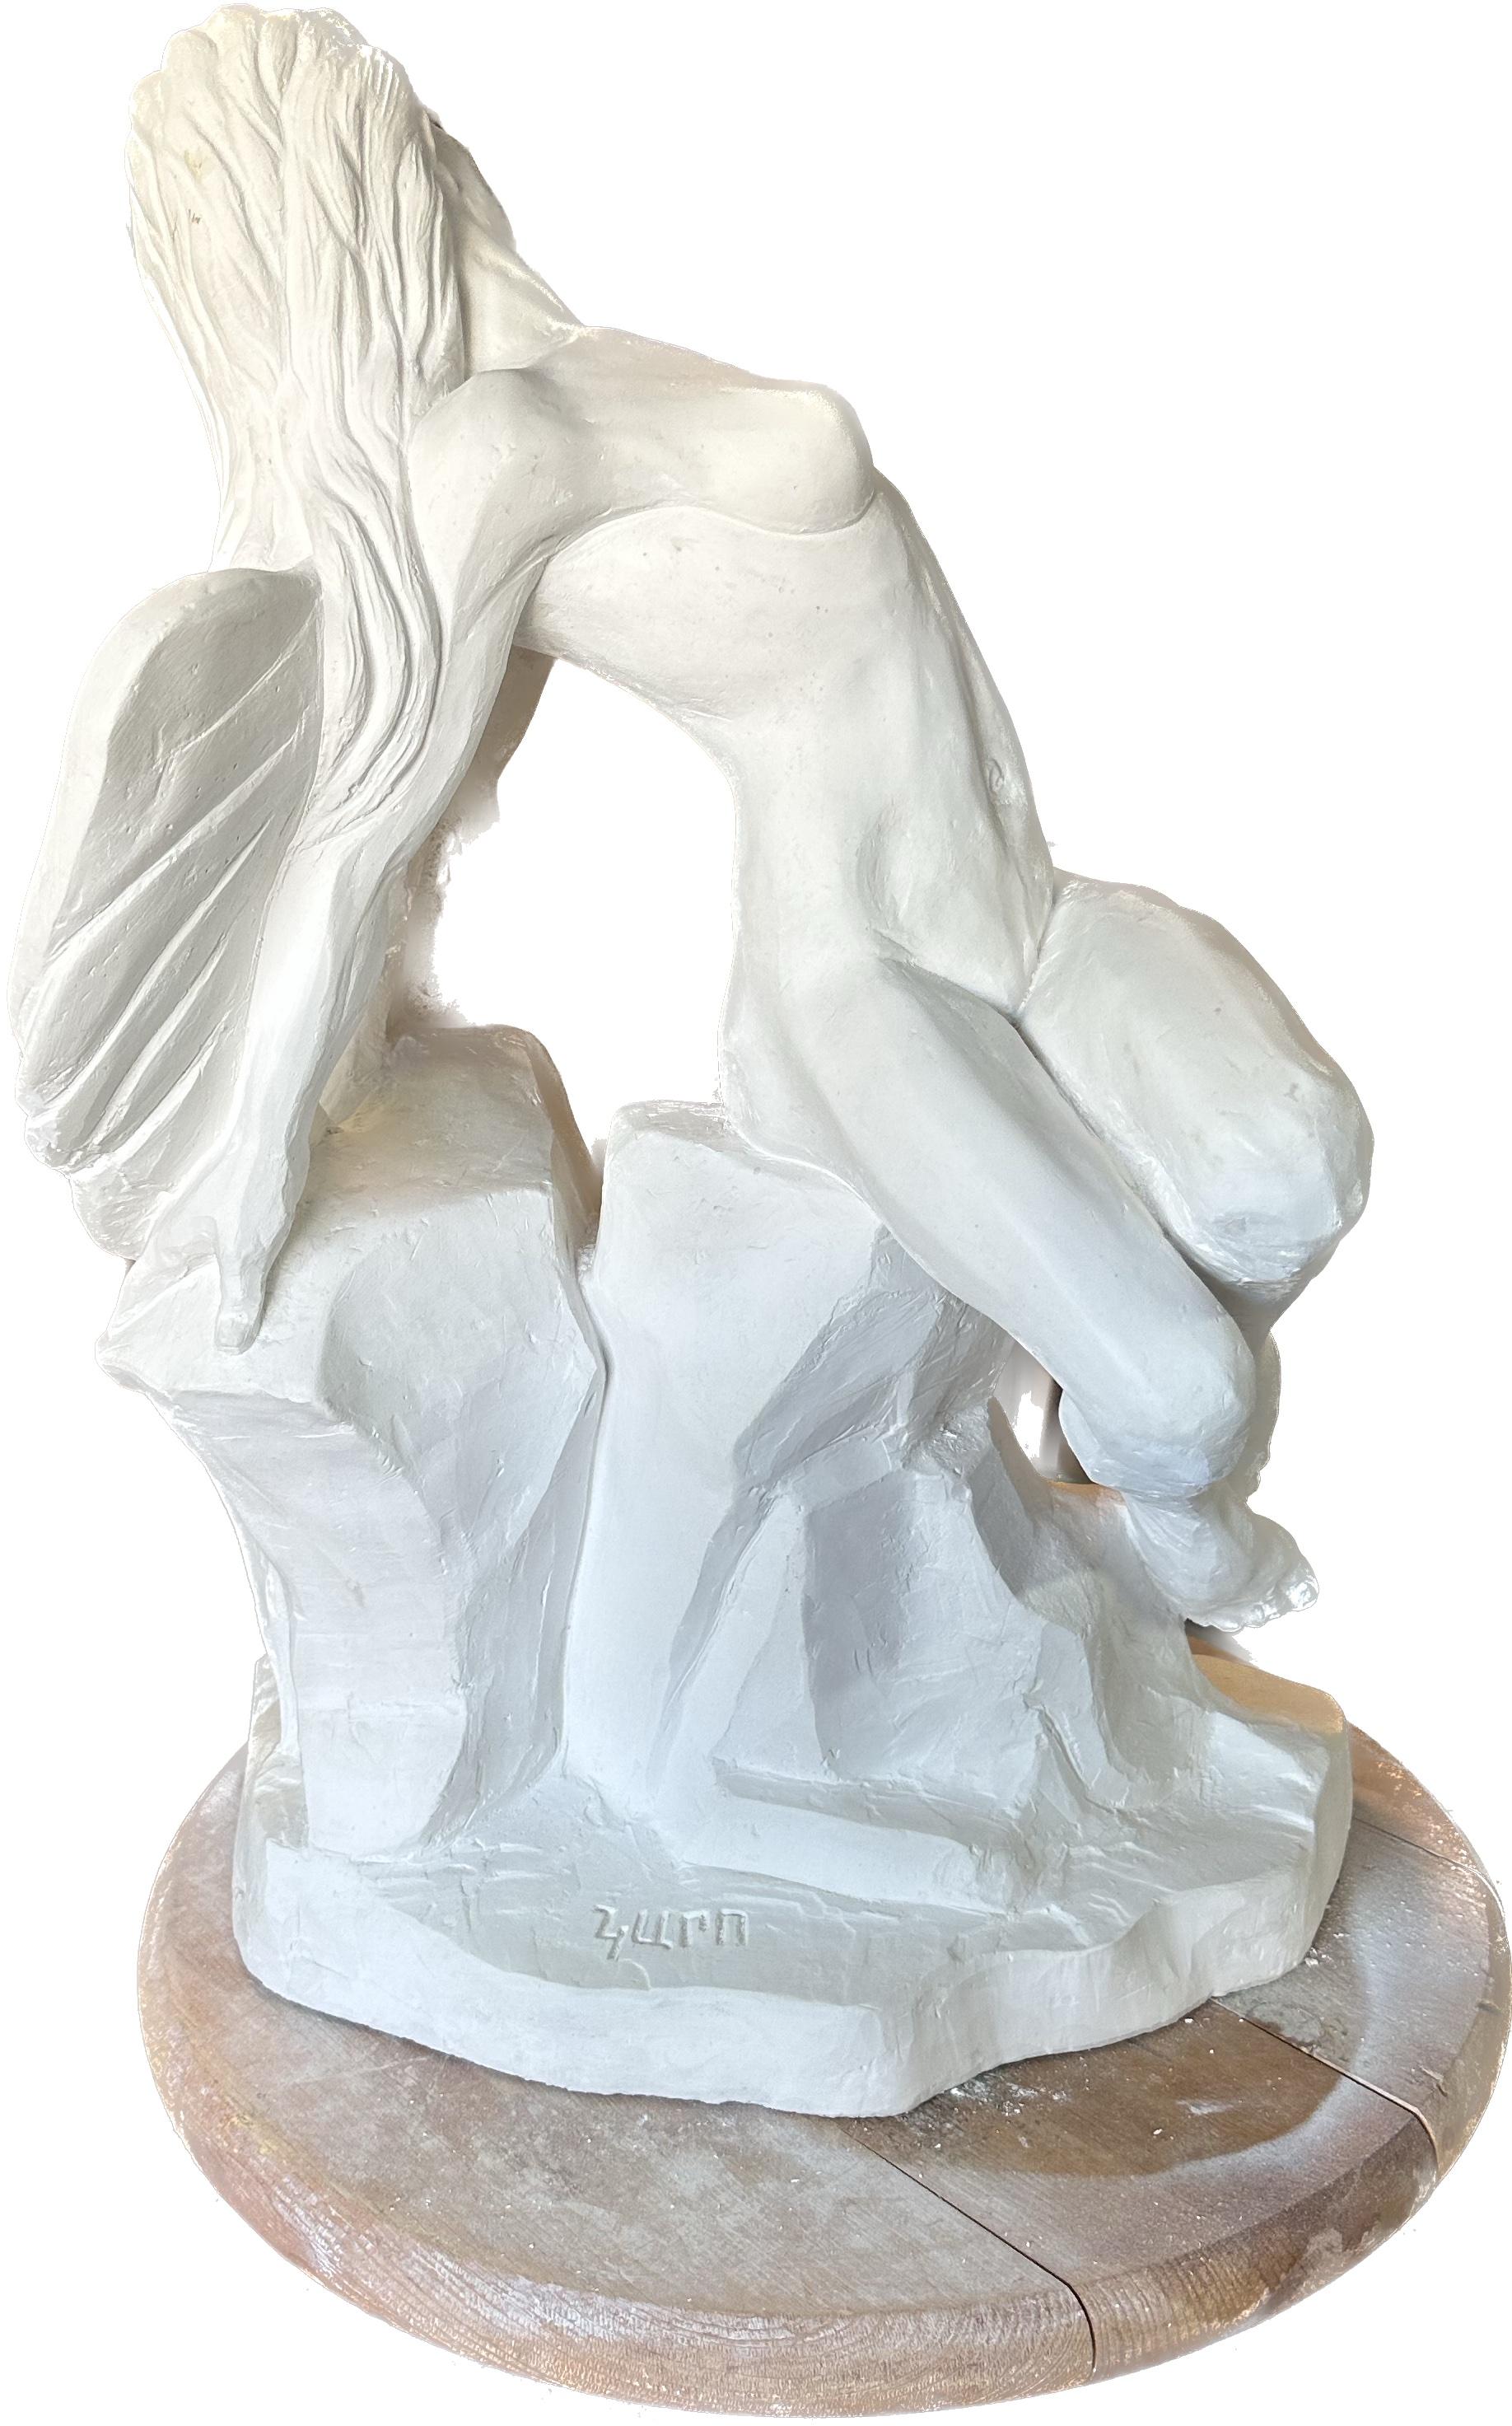 Karapet Balakeseryan  (Garo) Figurative Sculpture - Fallen Angel, Sculpture, Hydro Stone, Handmade by Garo, One of a Kind